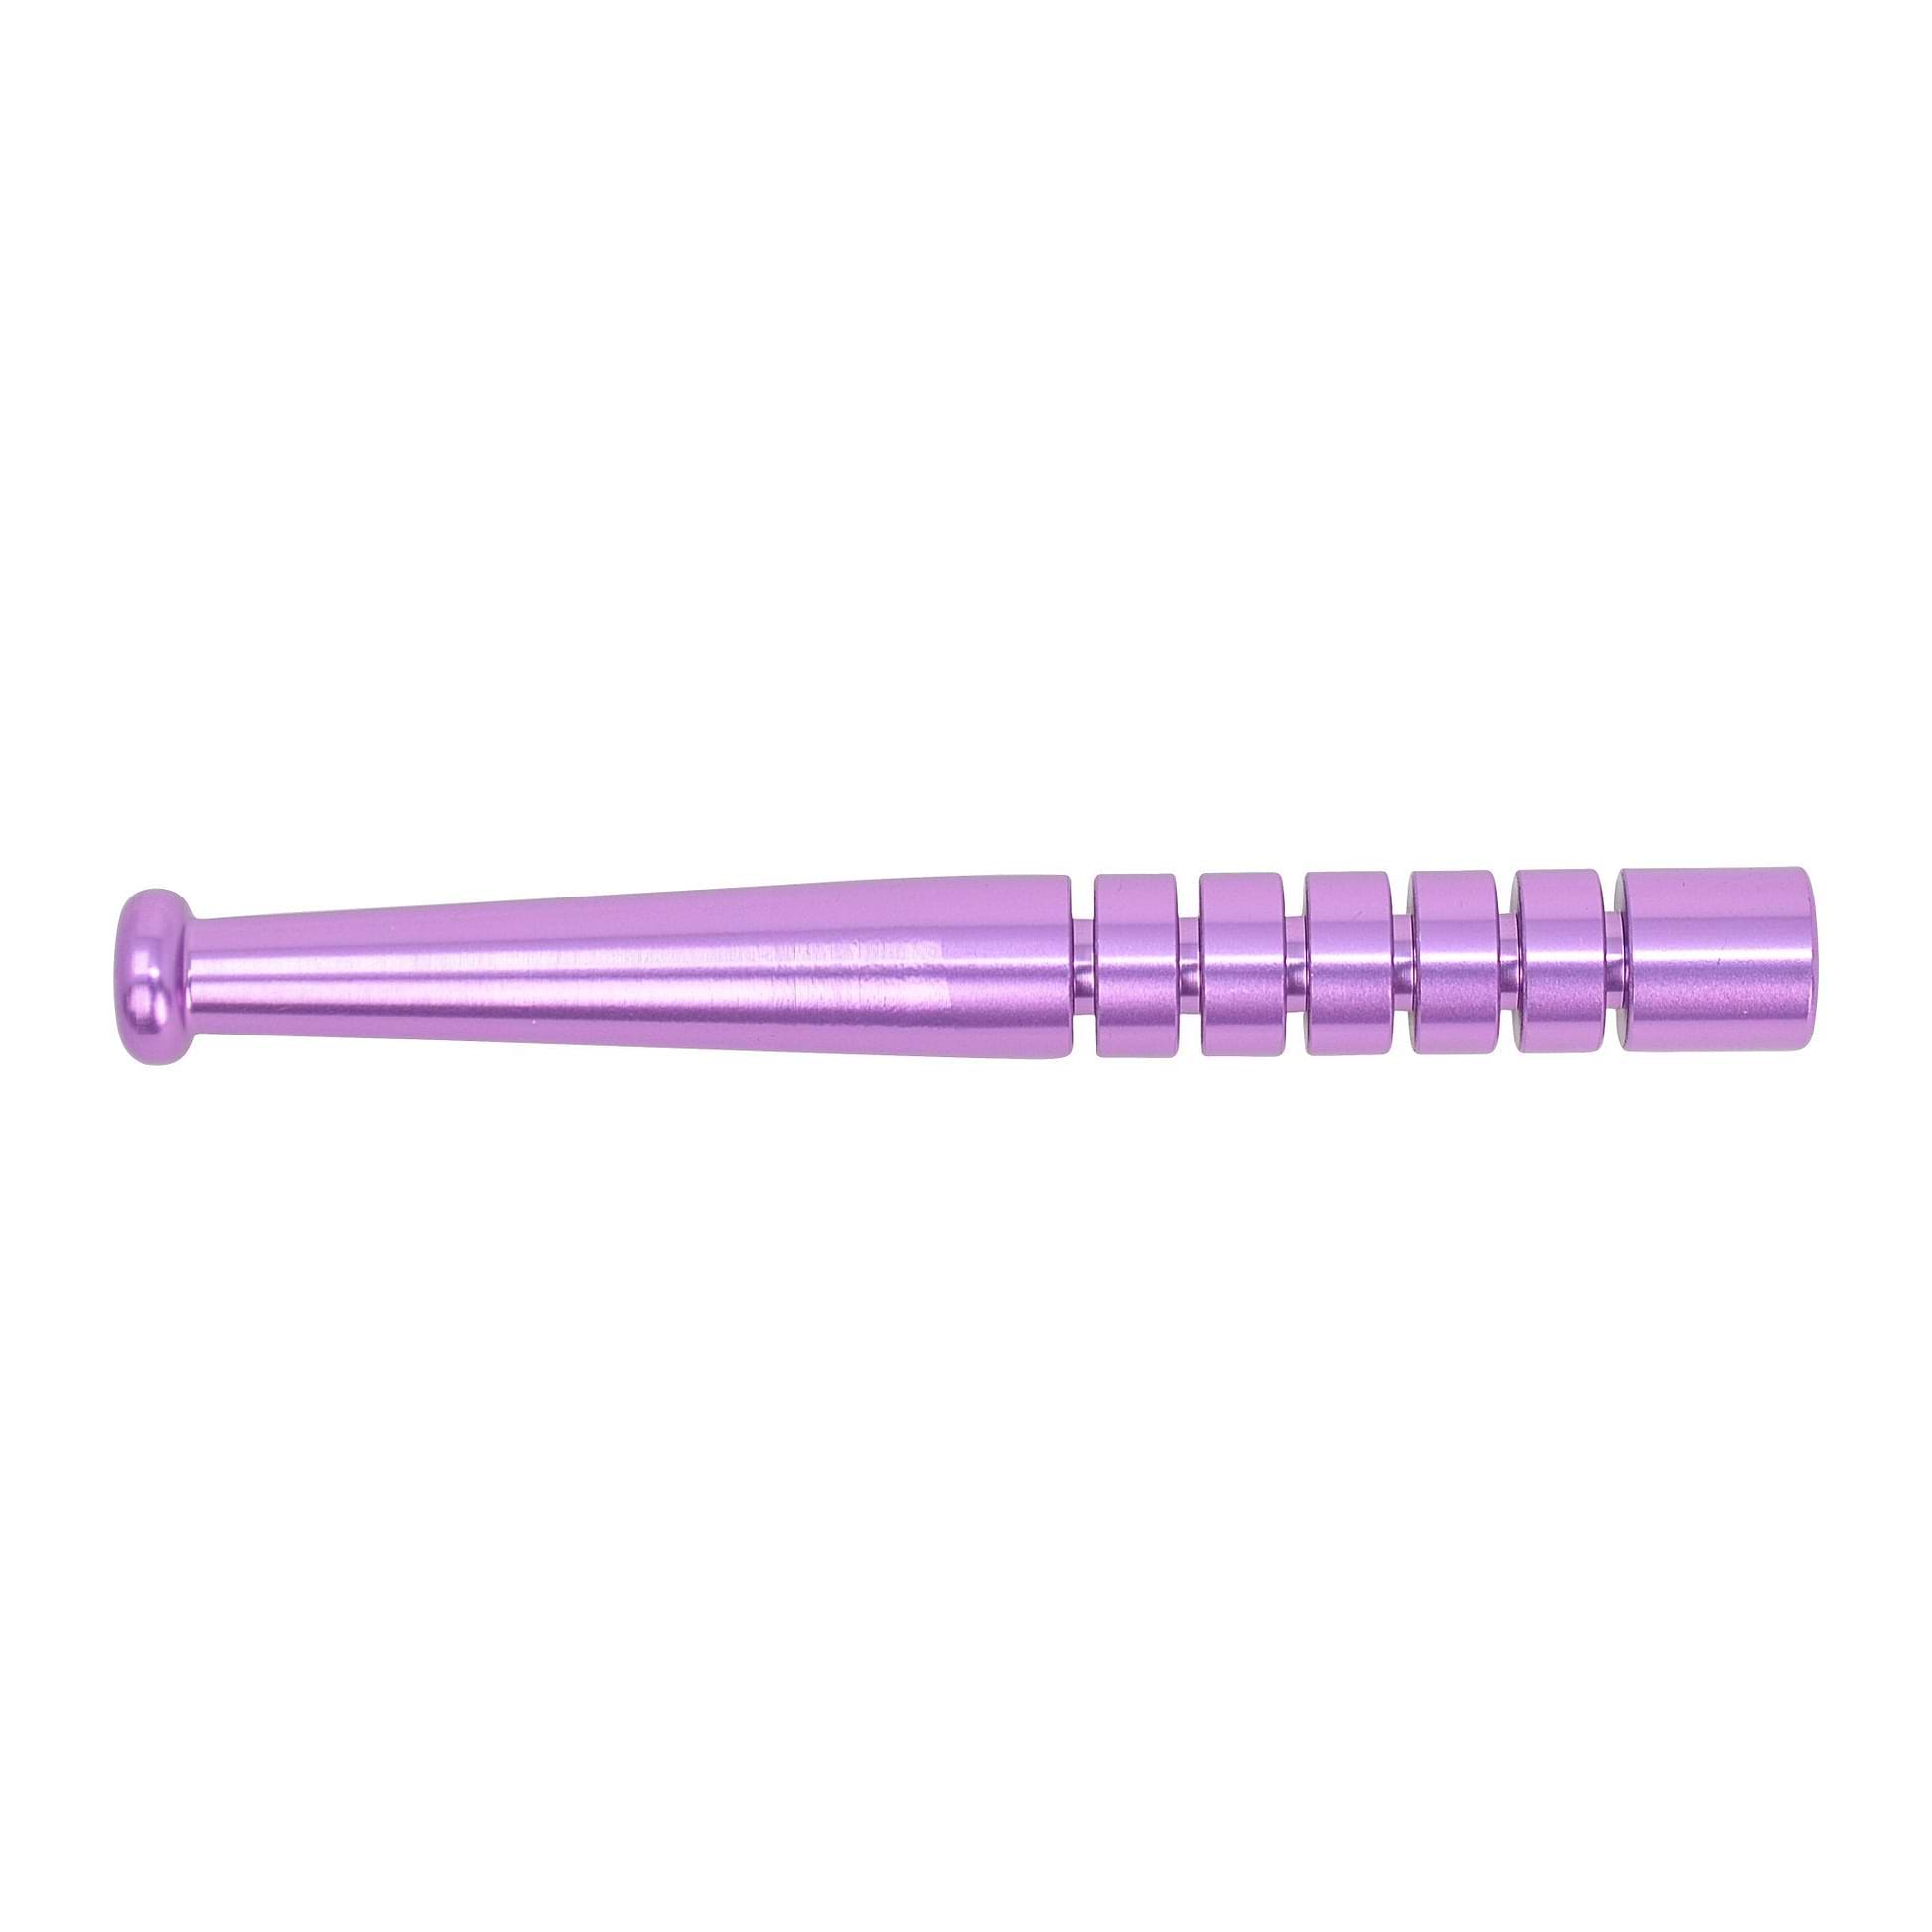 Purple metal oney little pipe one hitter smoking device with baseball bat design textured ridges